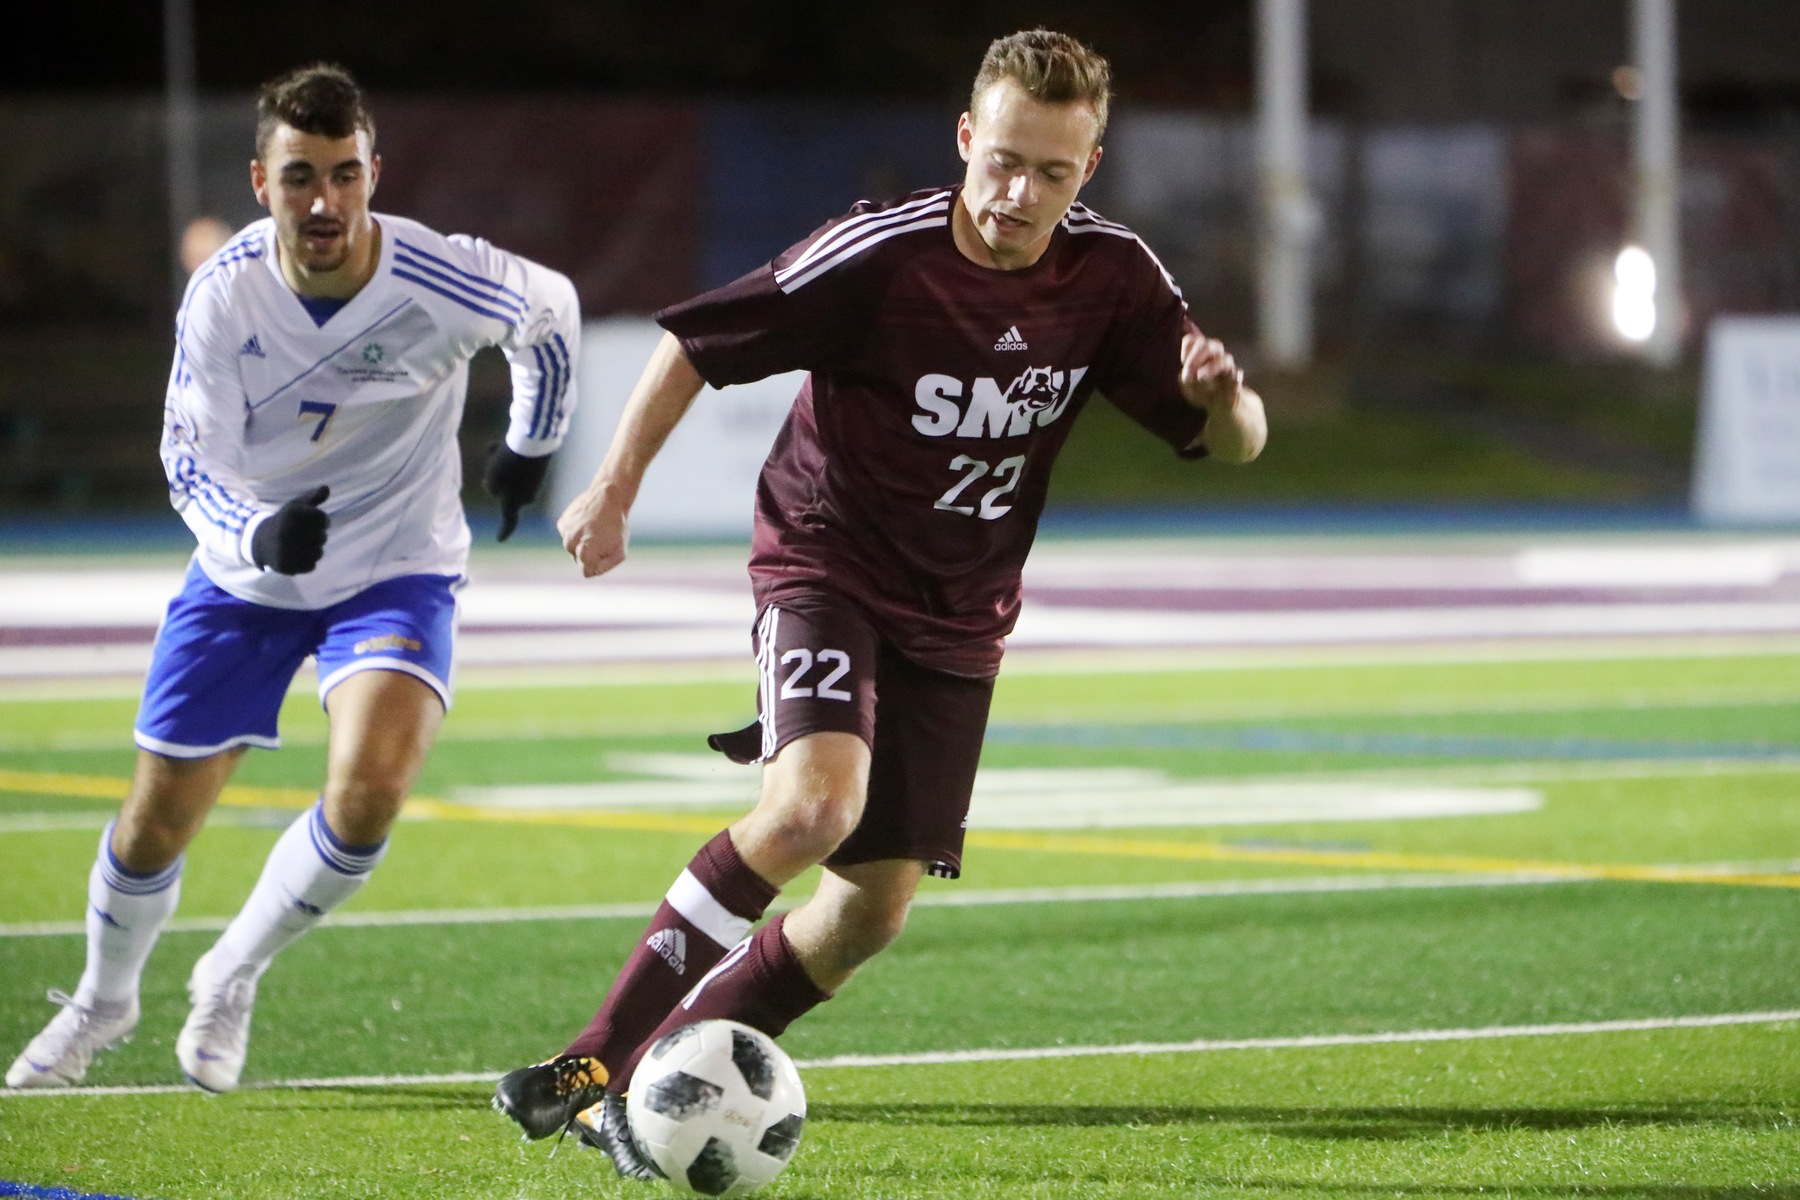 Moncton upends SMU 2-1 in men's soccer